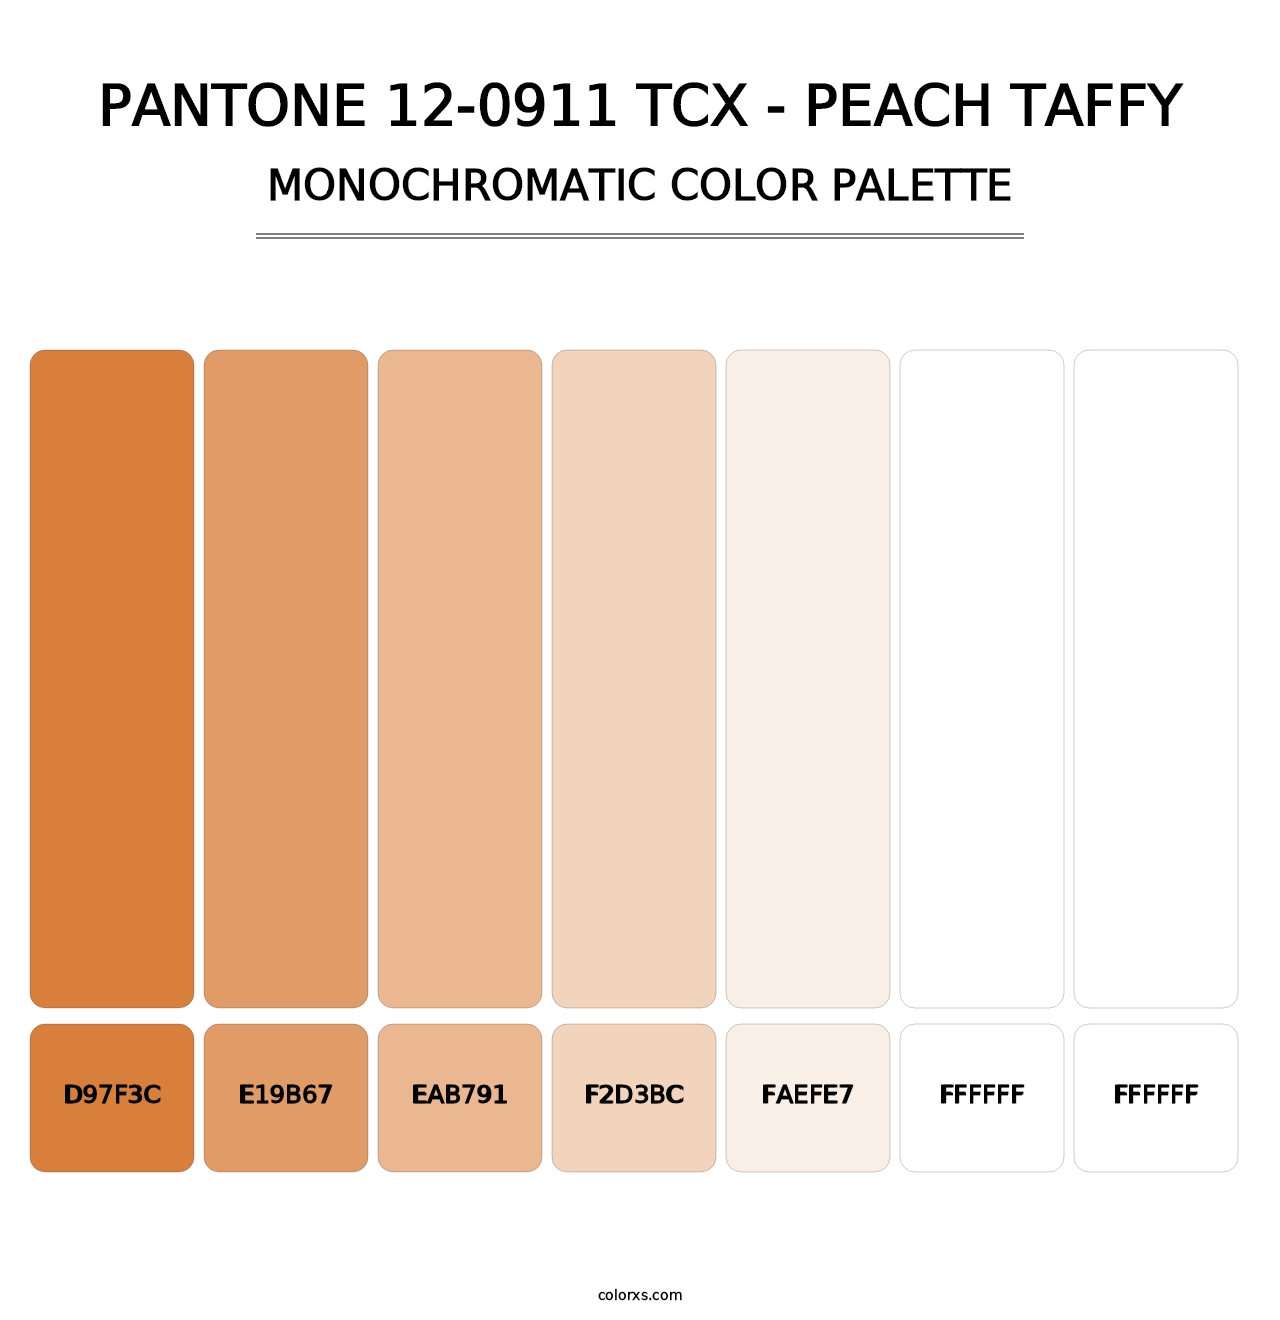 PANTONE 12-0911 TCX - Peach Taffy - Monochromatic Color Palette